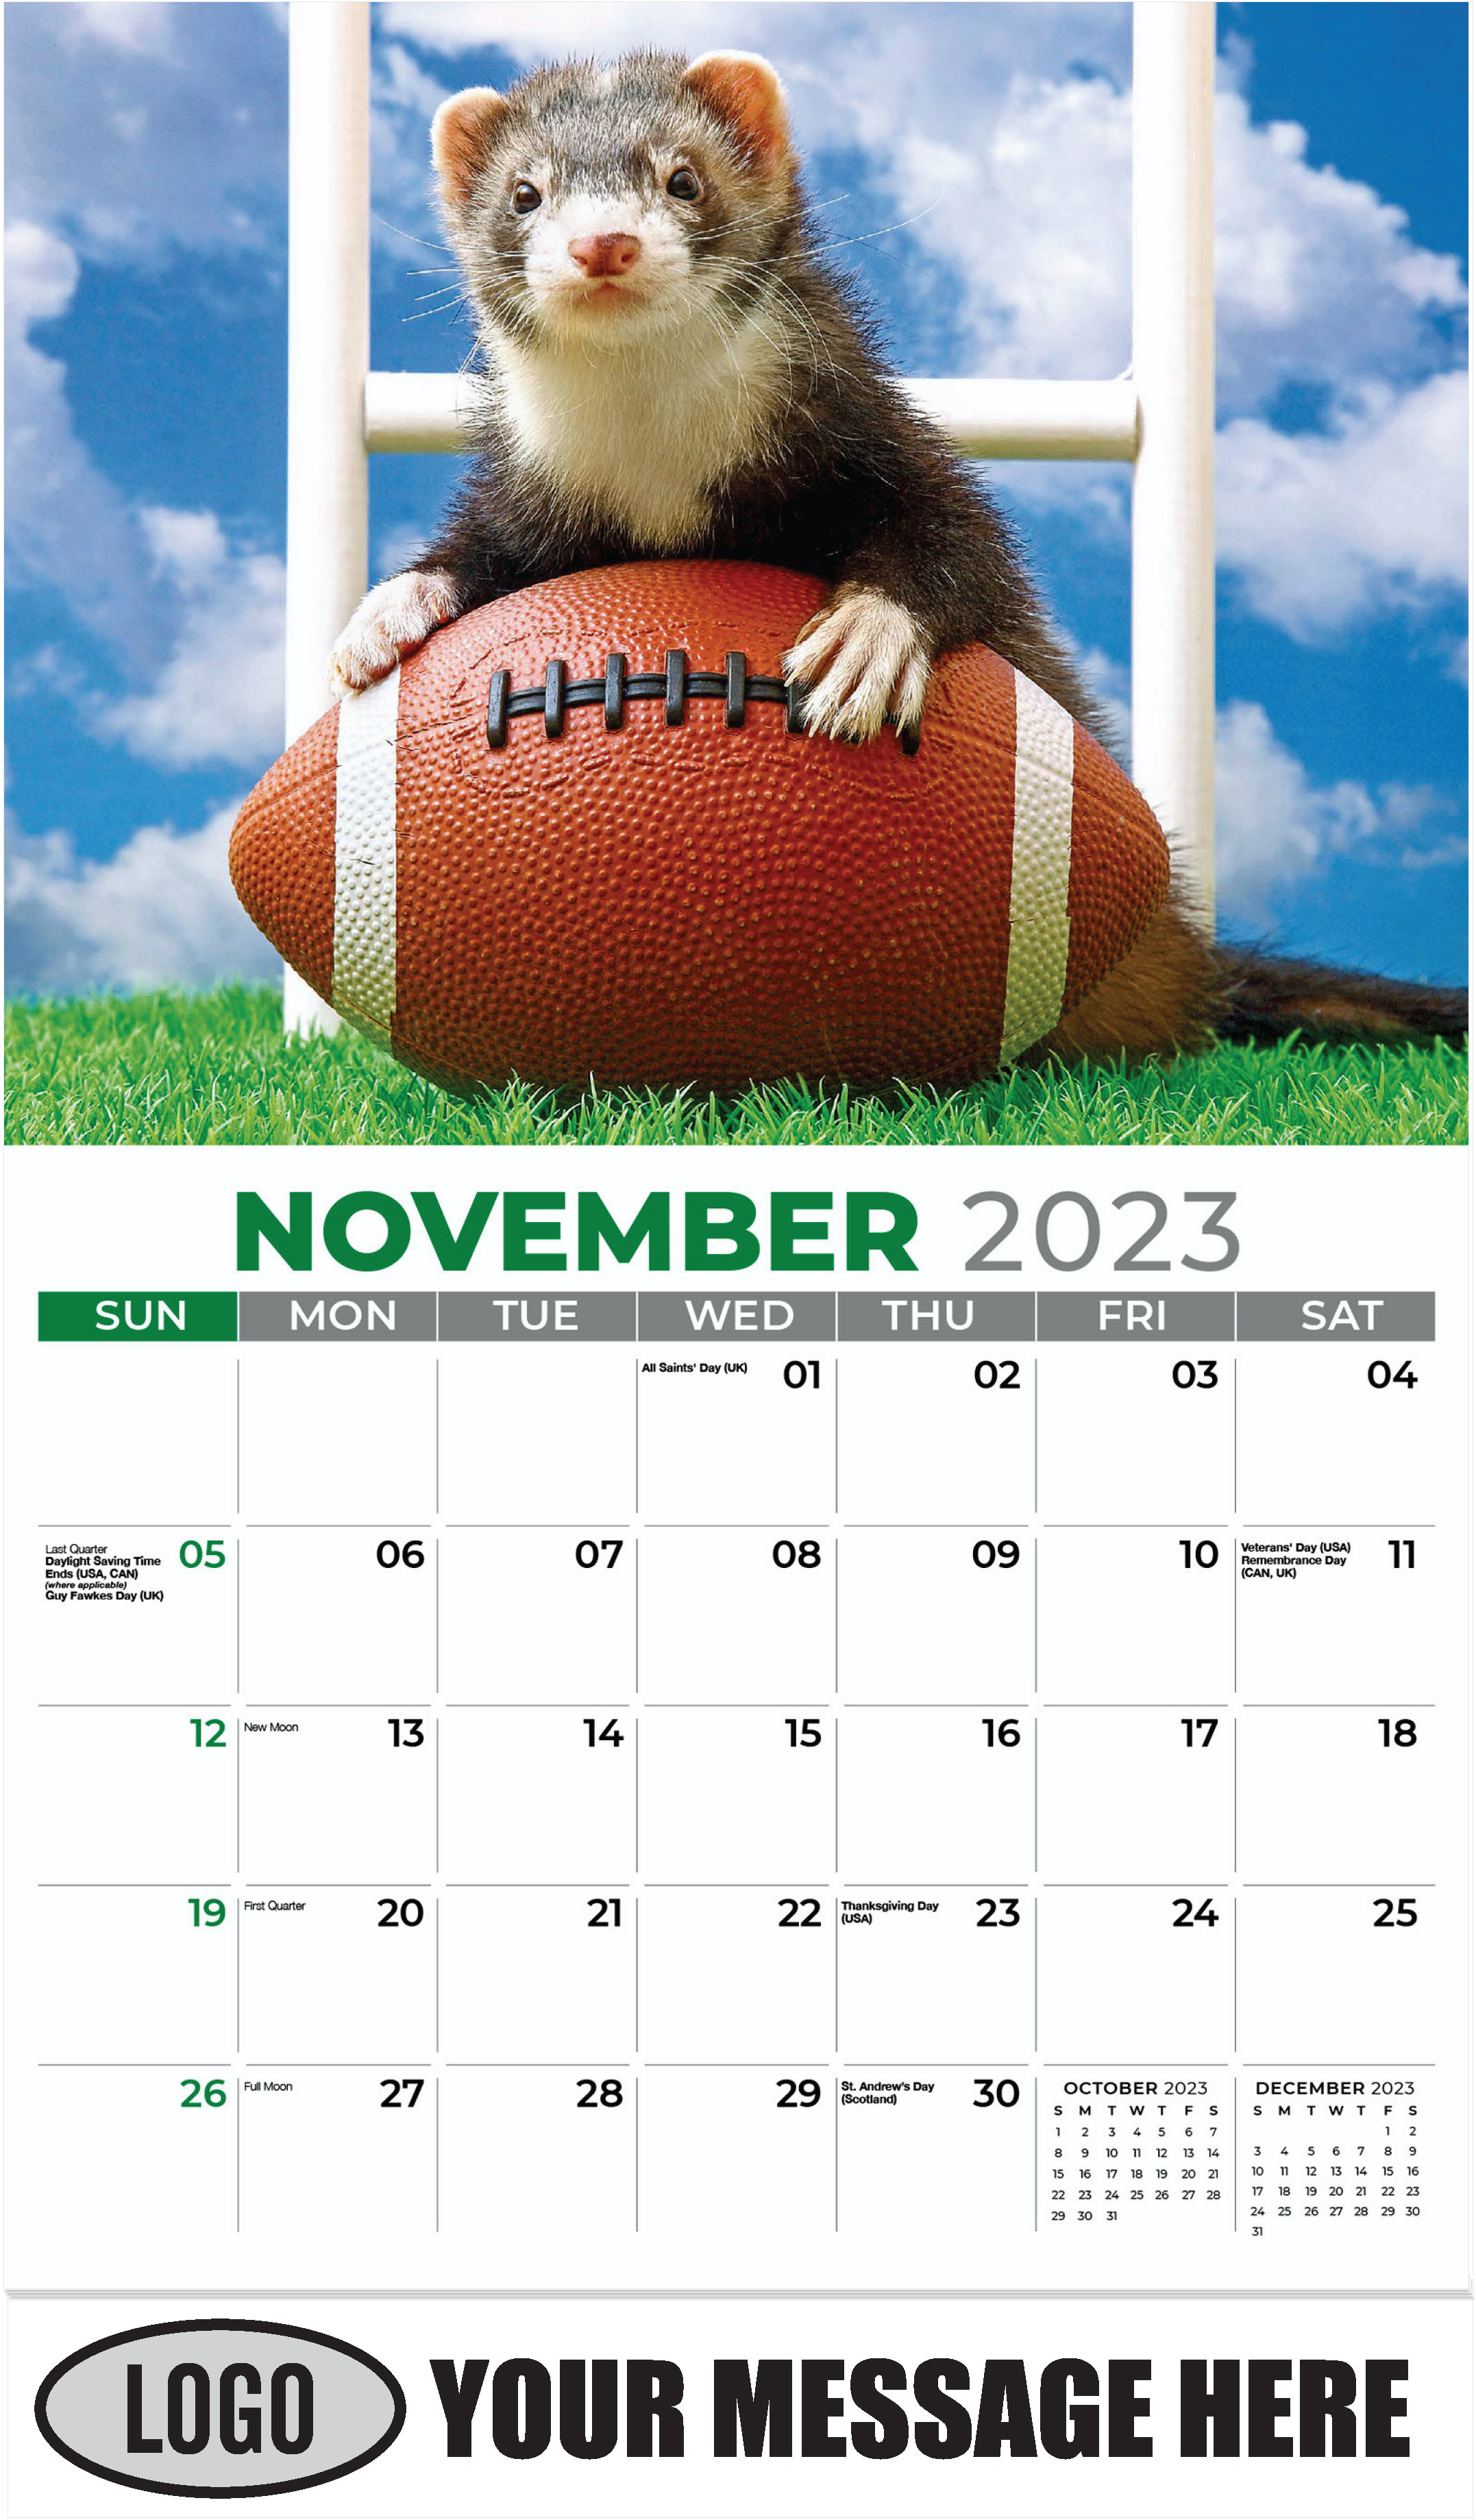 Ferret - November - Pets 2023 Promotional Calendar